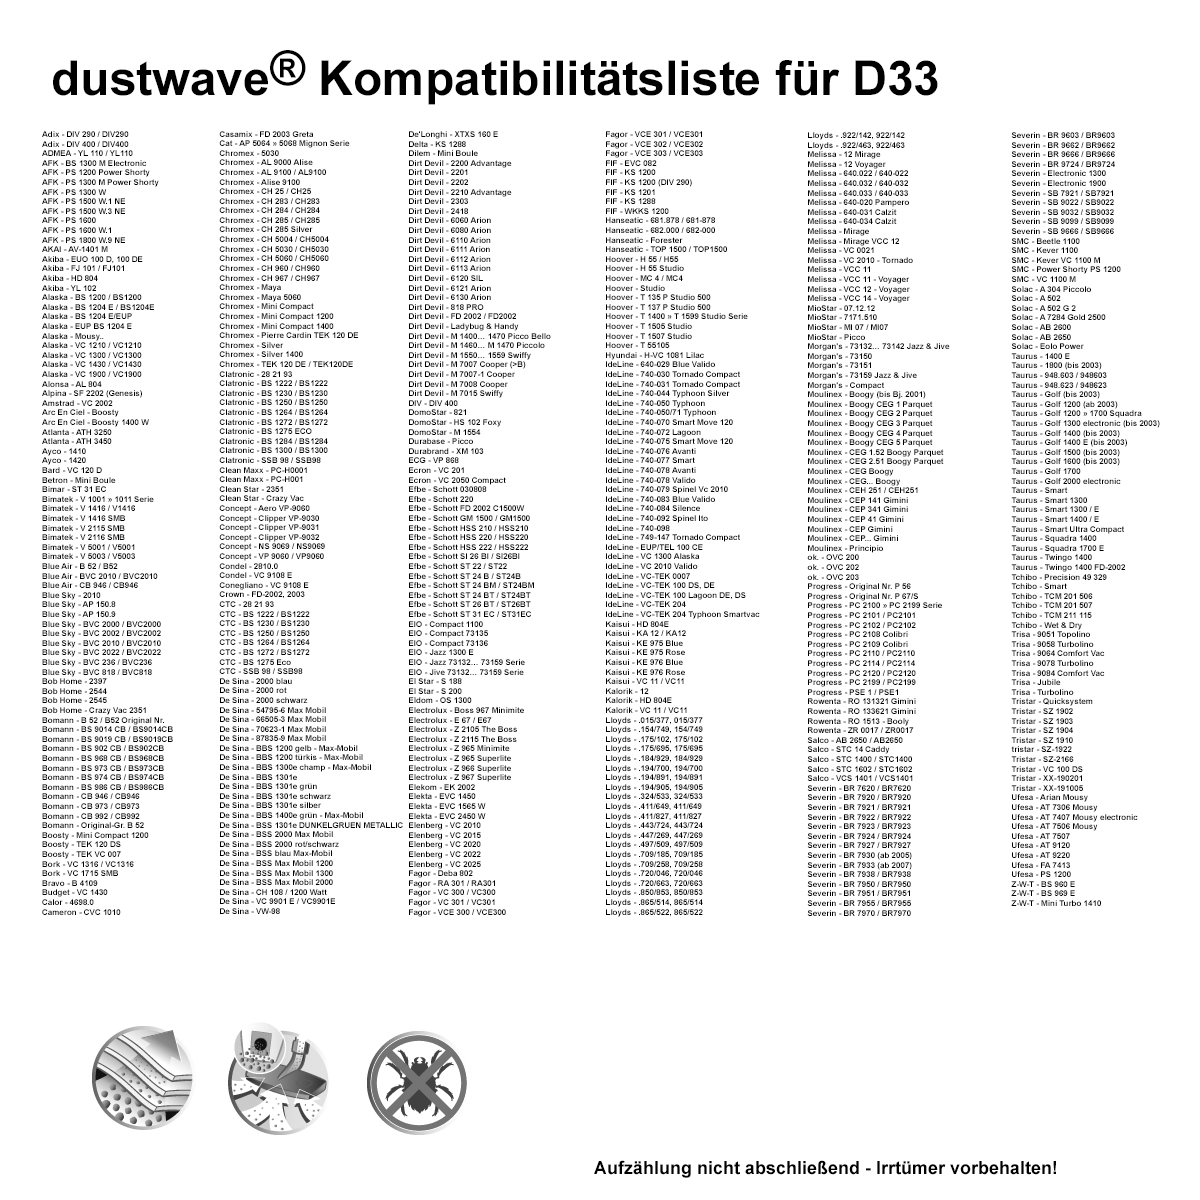 40 dustwave® Staubsaugerbeutel für Durabase Picco, Elenberg VC 2015, elta VC 0021, FAR Cyrius SC 3201 H, KHG BS 1400 MT, ok. OVC 200, Privileg 816.160